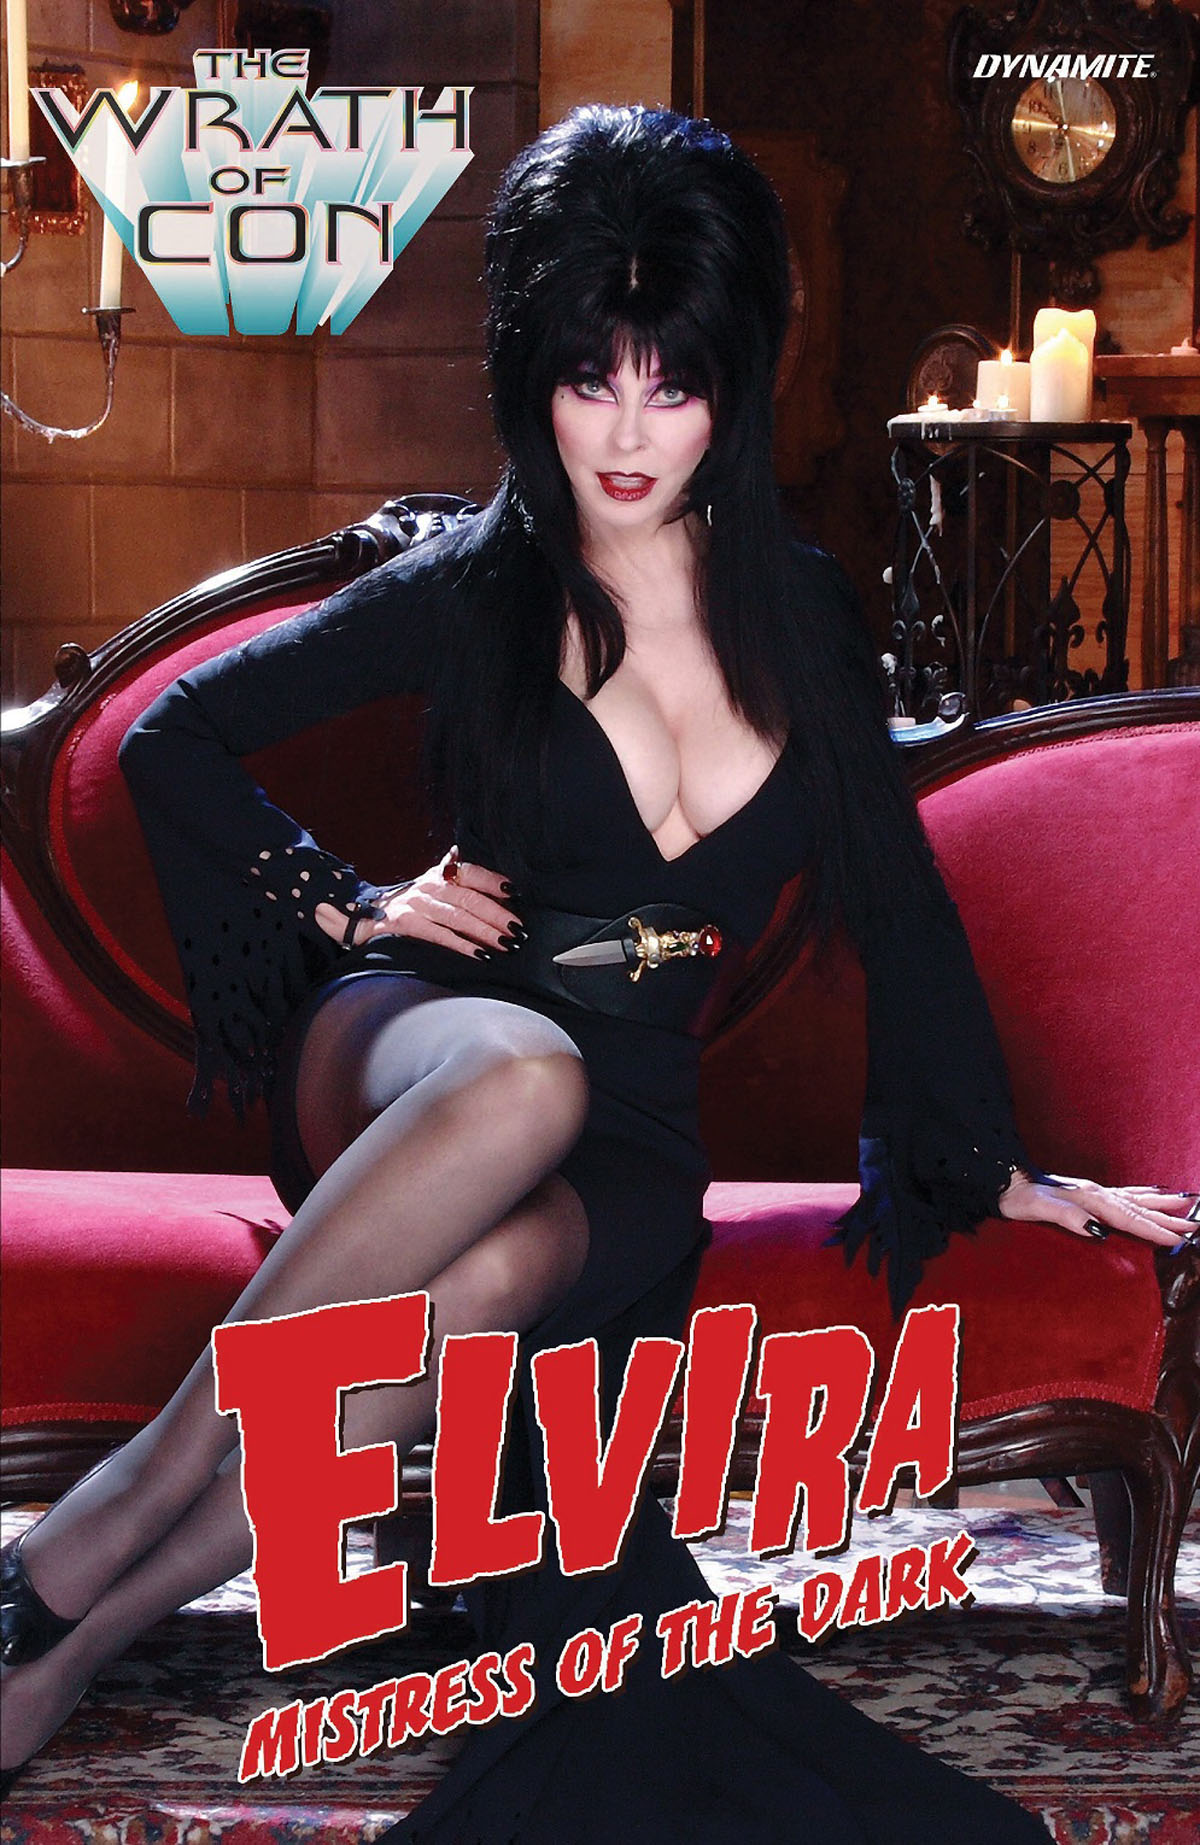 Elvira: The Wrath of Con #1 Photo Cover